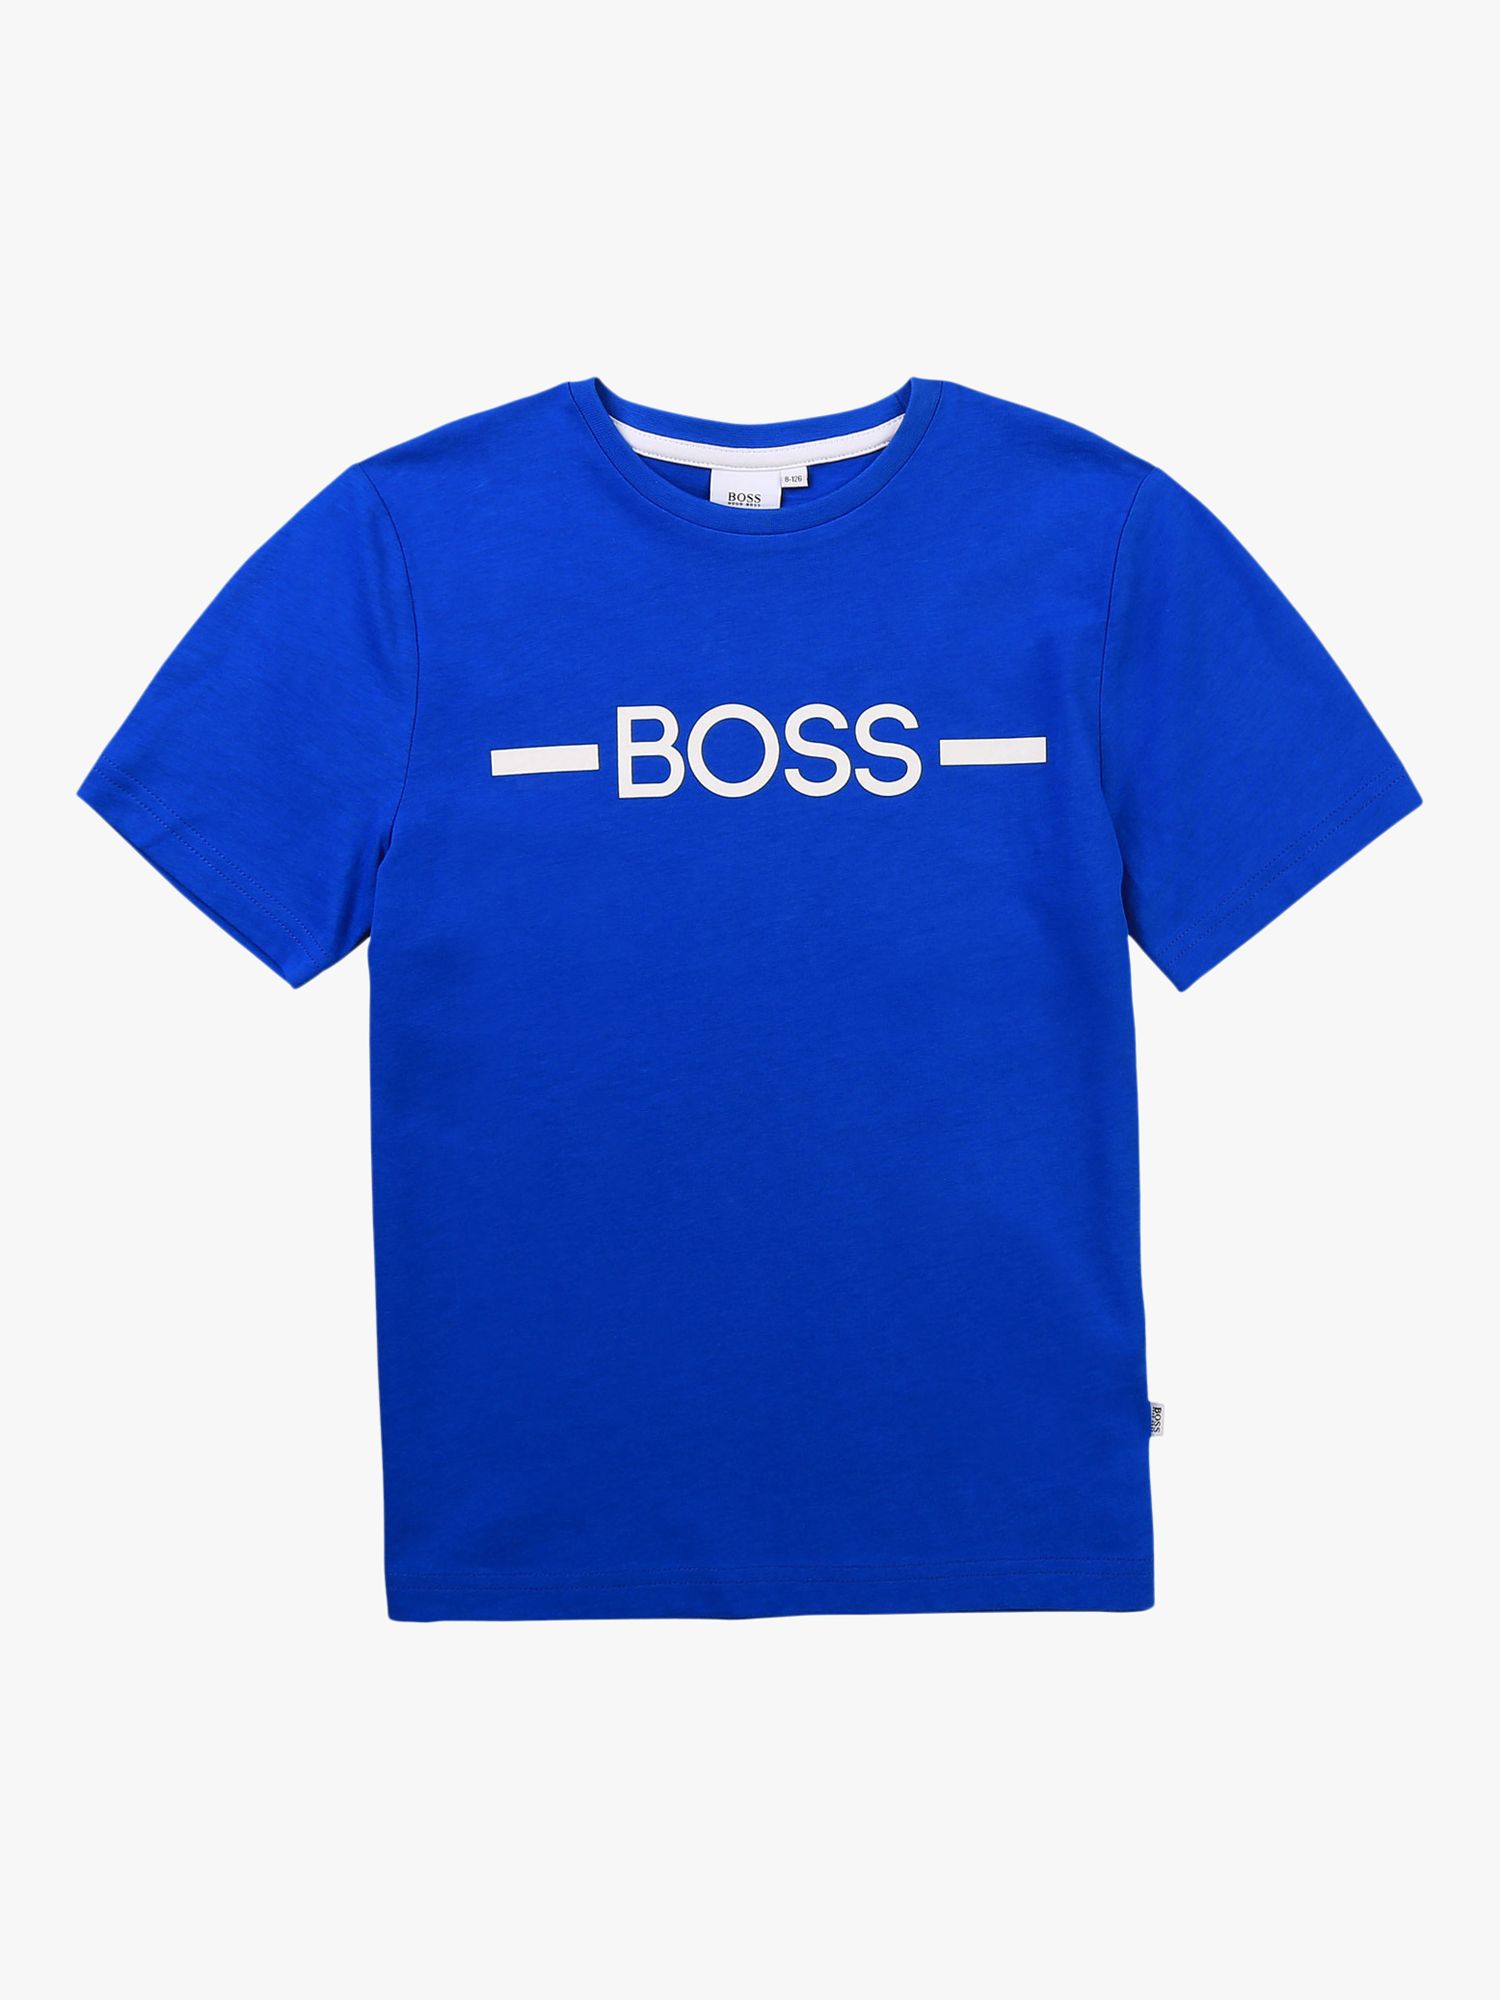 HUGO BOSS Kids' Slim Fit Logo T-Shirt, Royal Blue at John Lewis & Partners